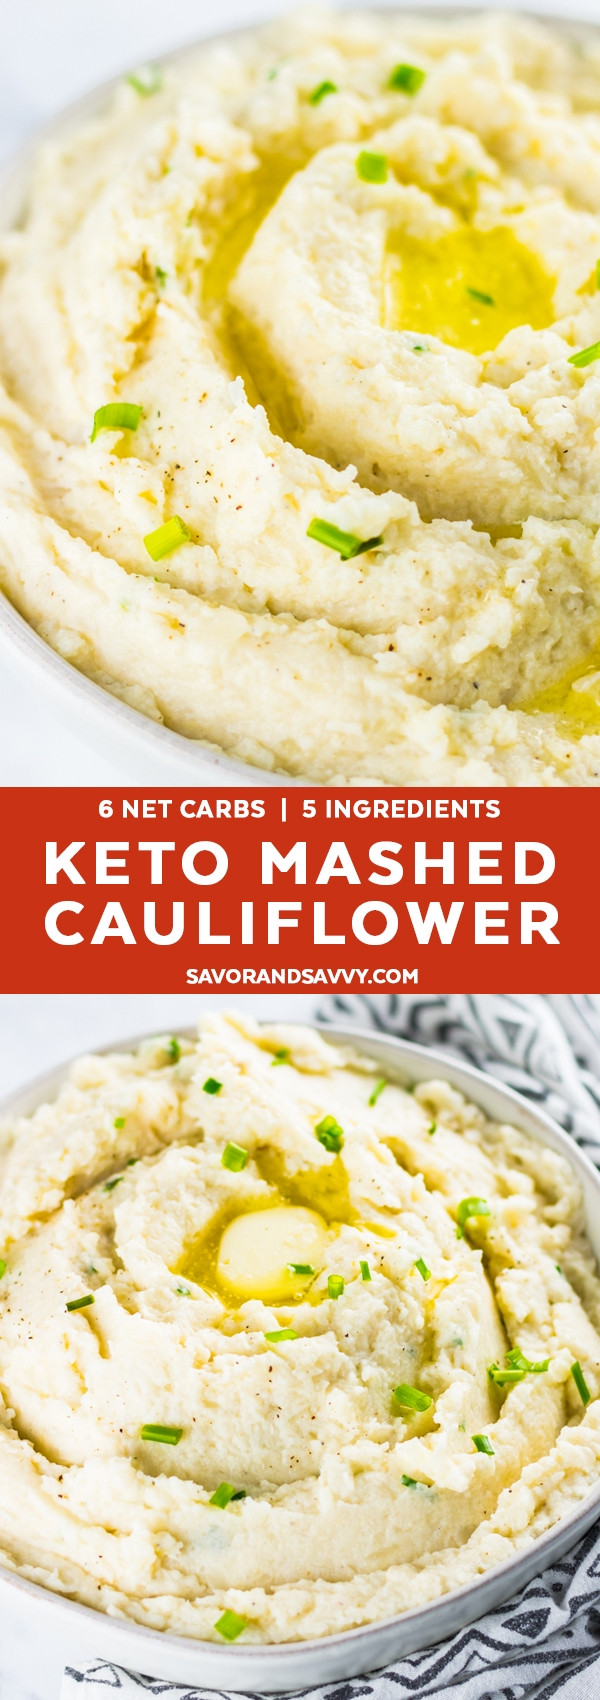 Mashed Cauliflower Keto
 Keto Mashed Cauliflower Recipe